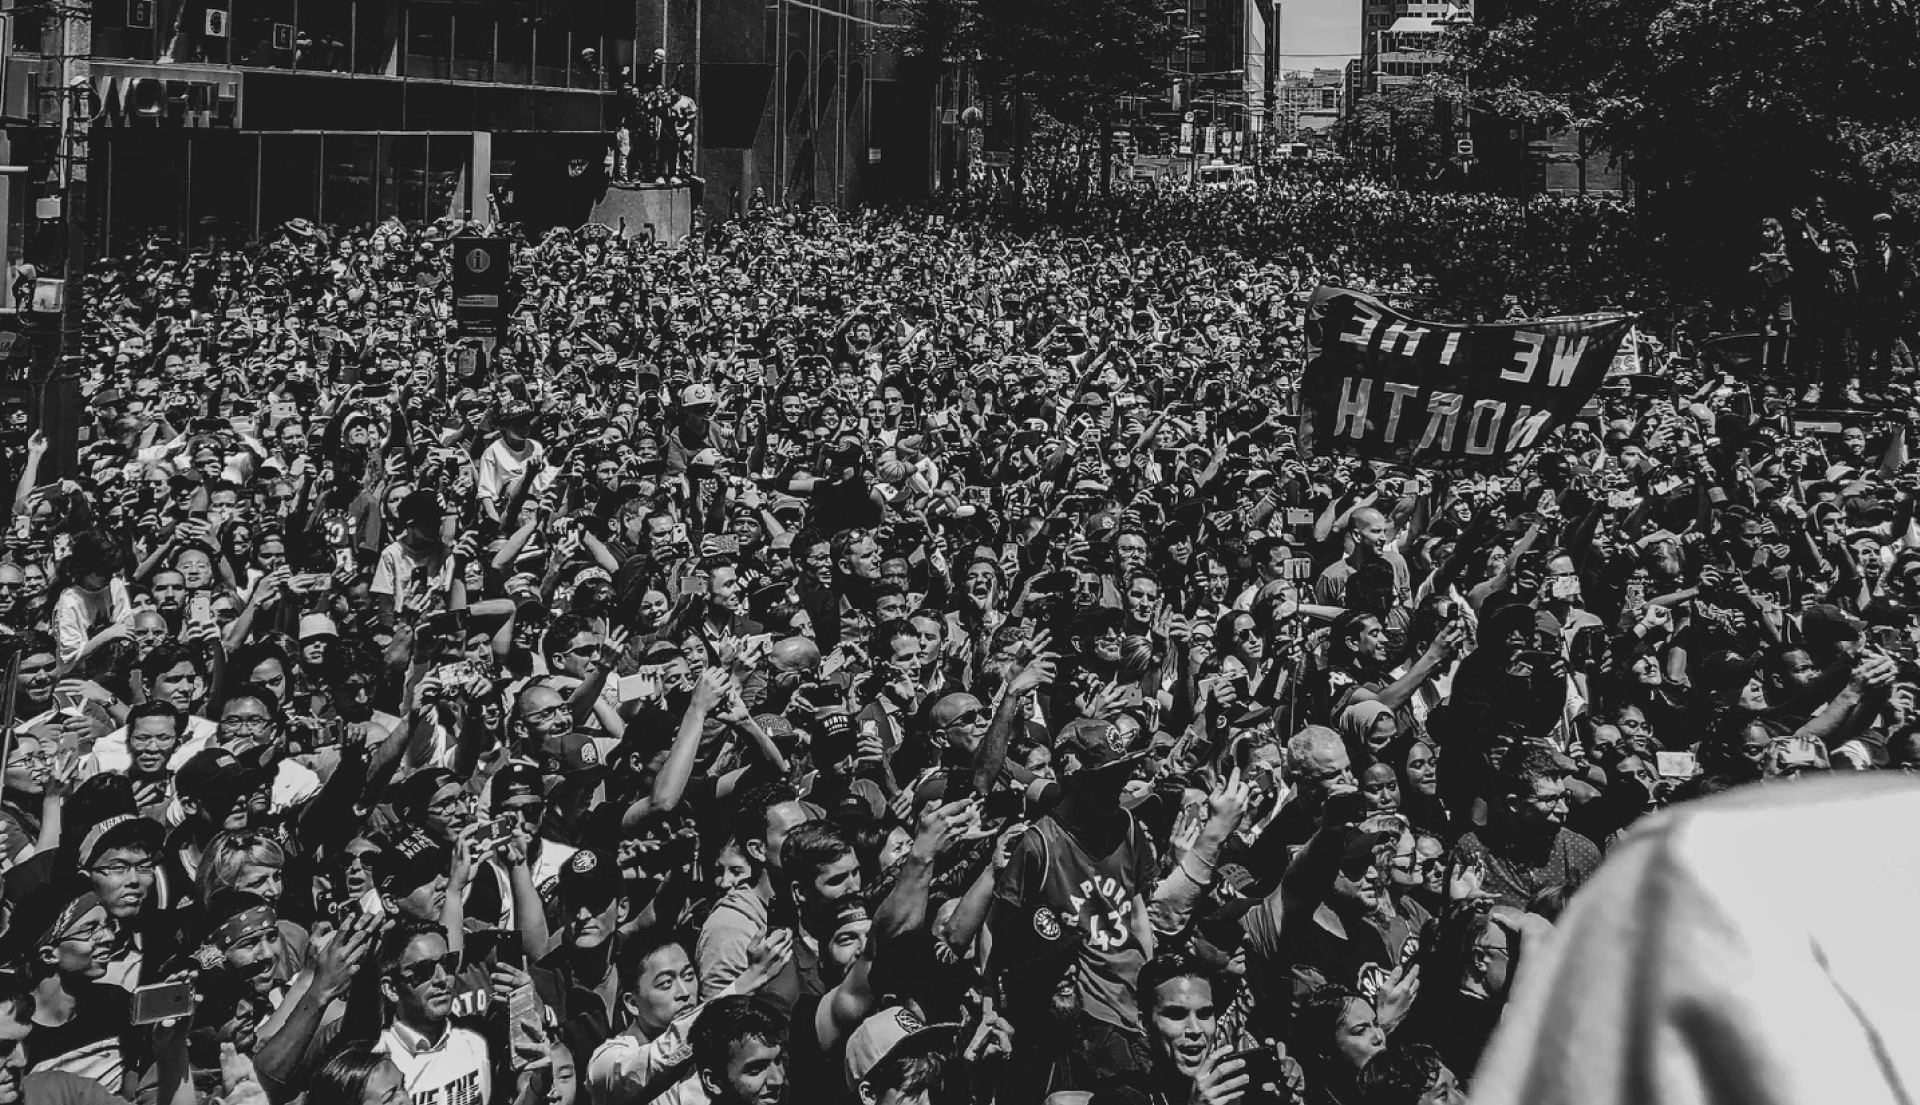 Photograph of crowd at Championship parade